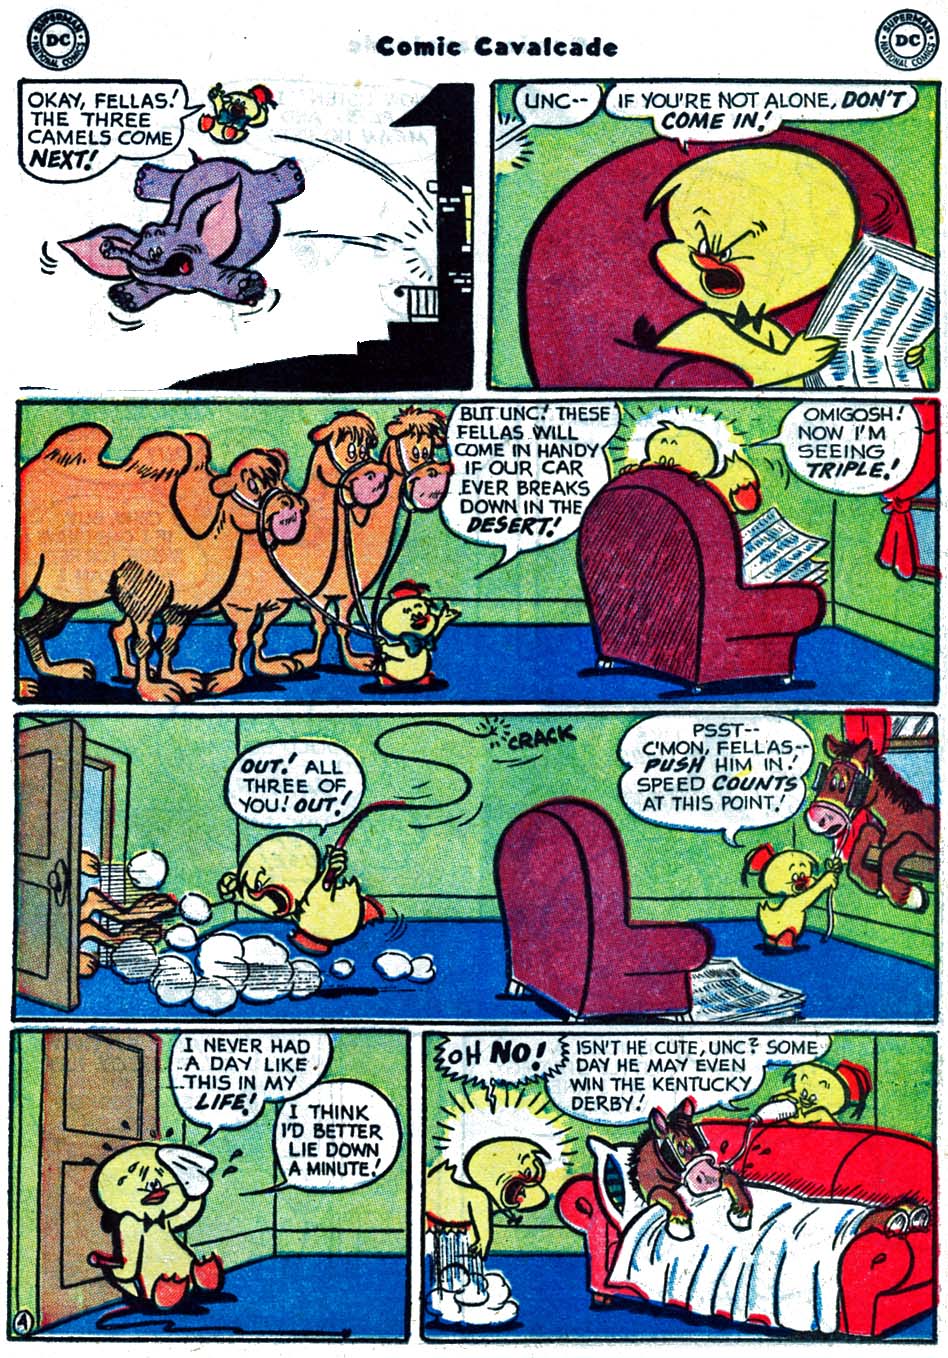 Comic Cavalcade issue 60 - Page 25